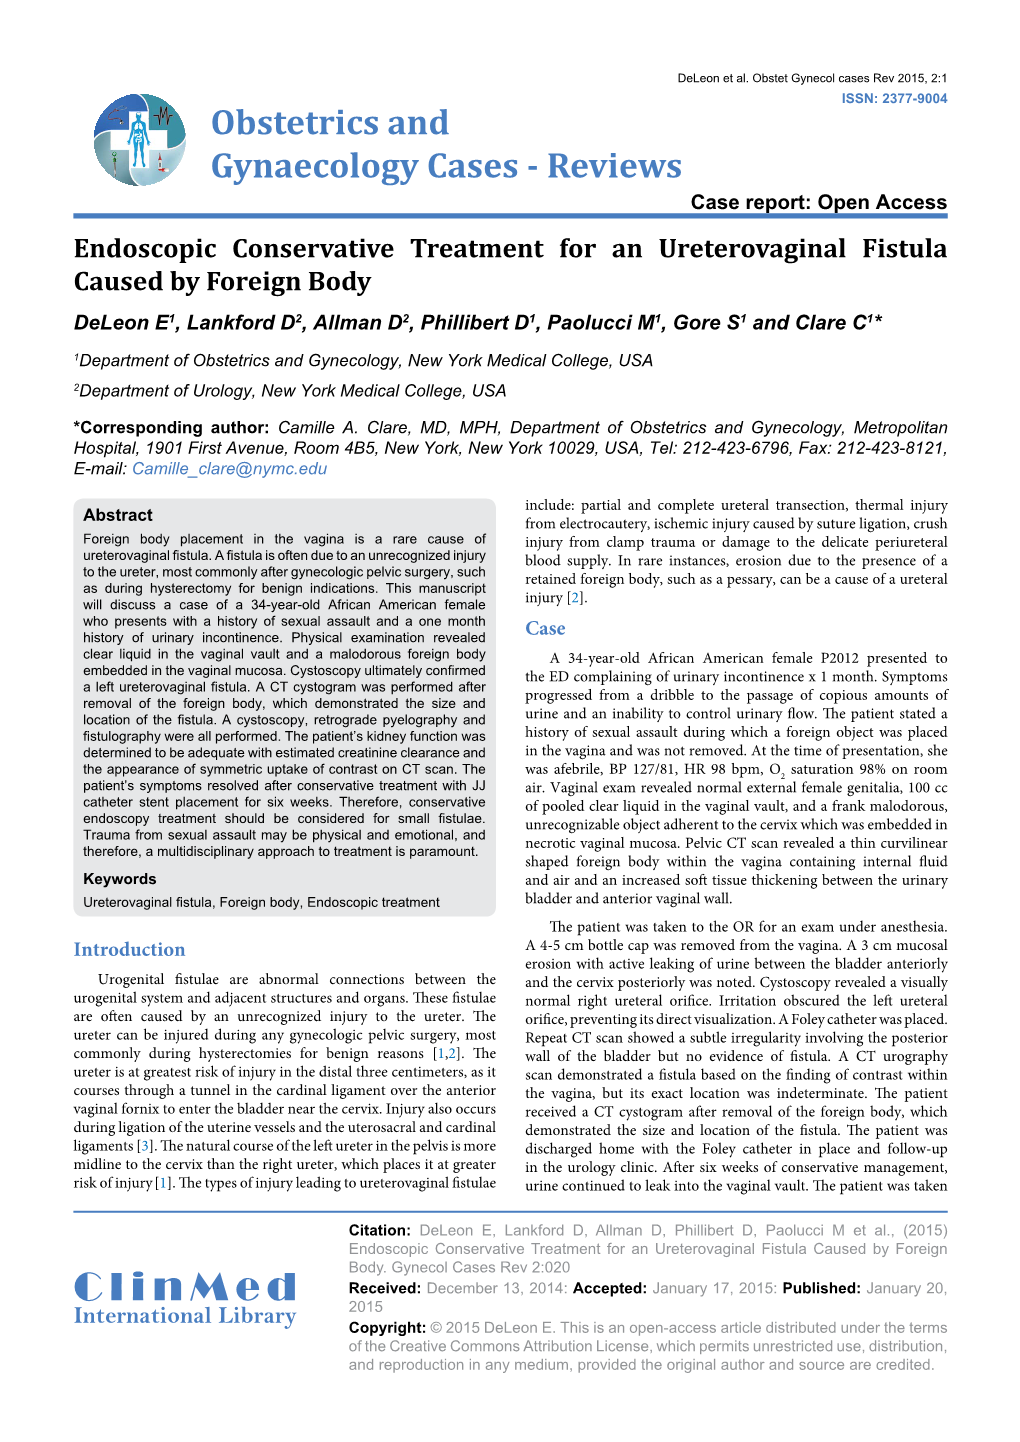 Endoscopic Conservative Treatment for an Ureterovaginal Fistula